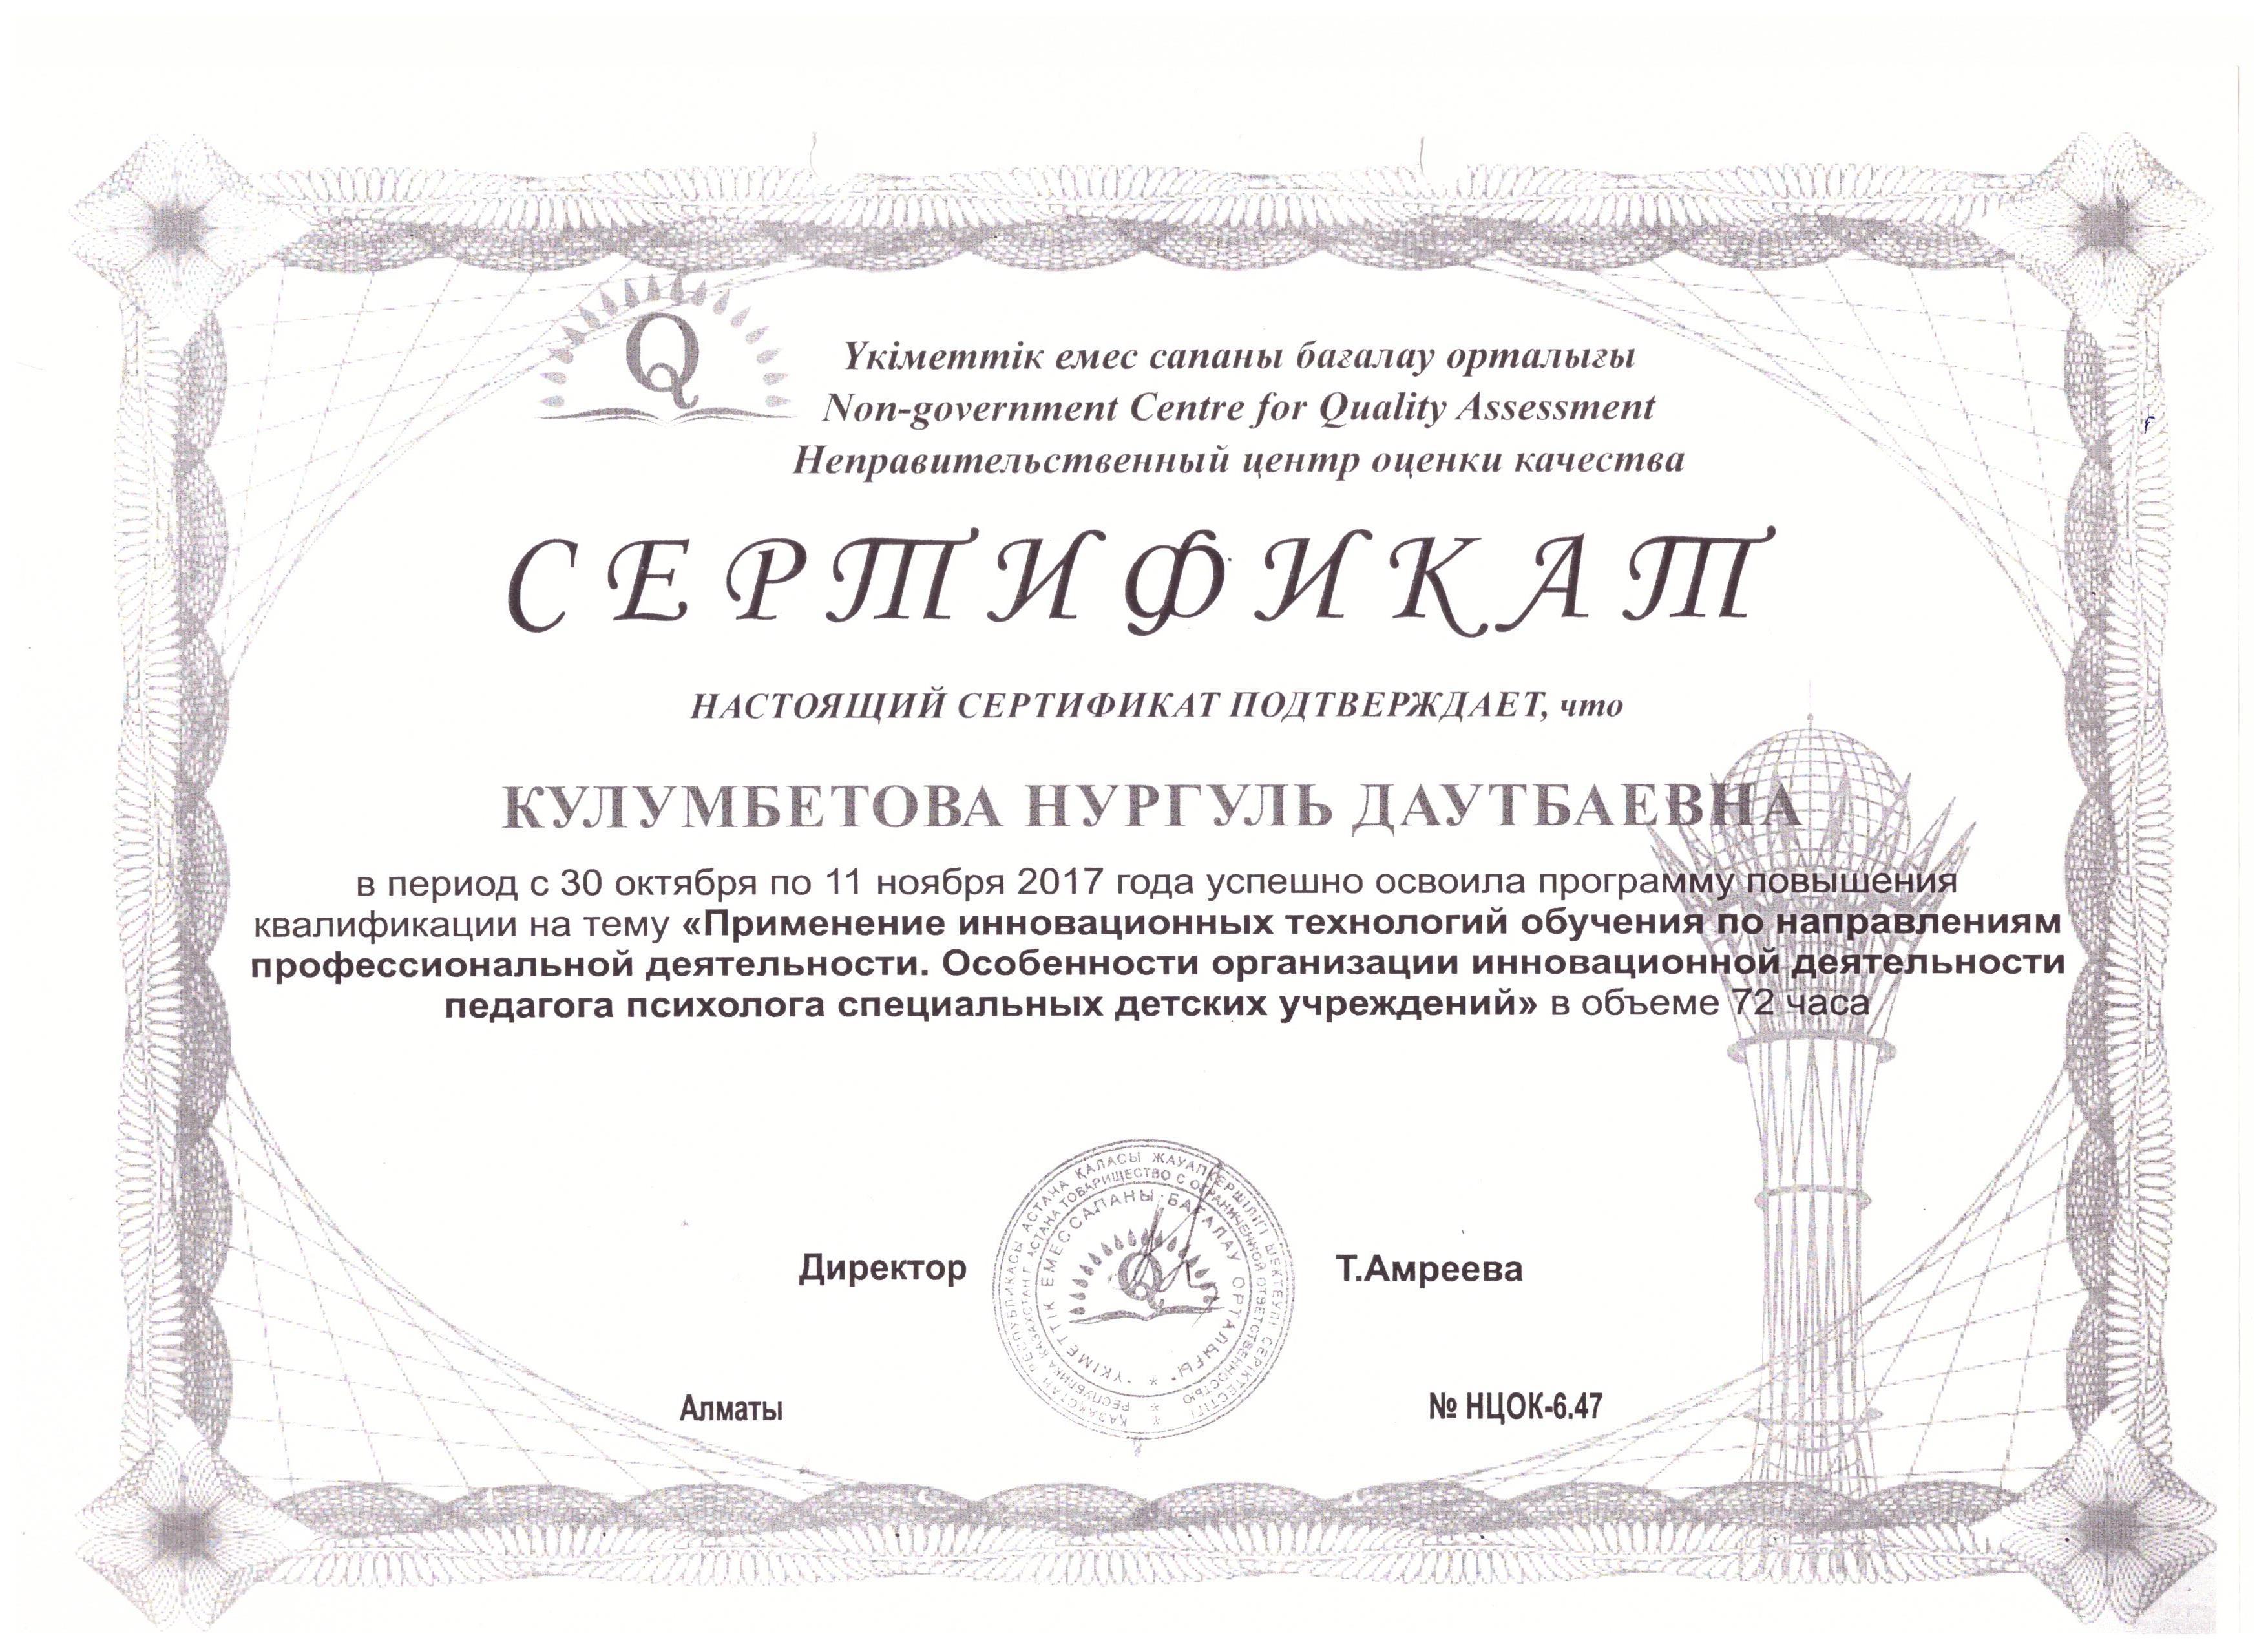 Құлымбетова Н.Д. сертификат